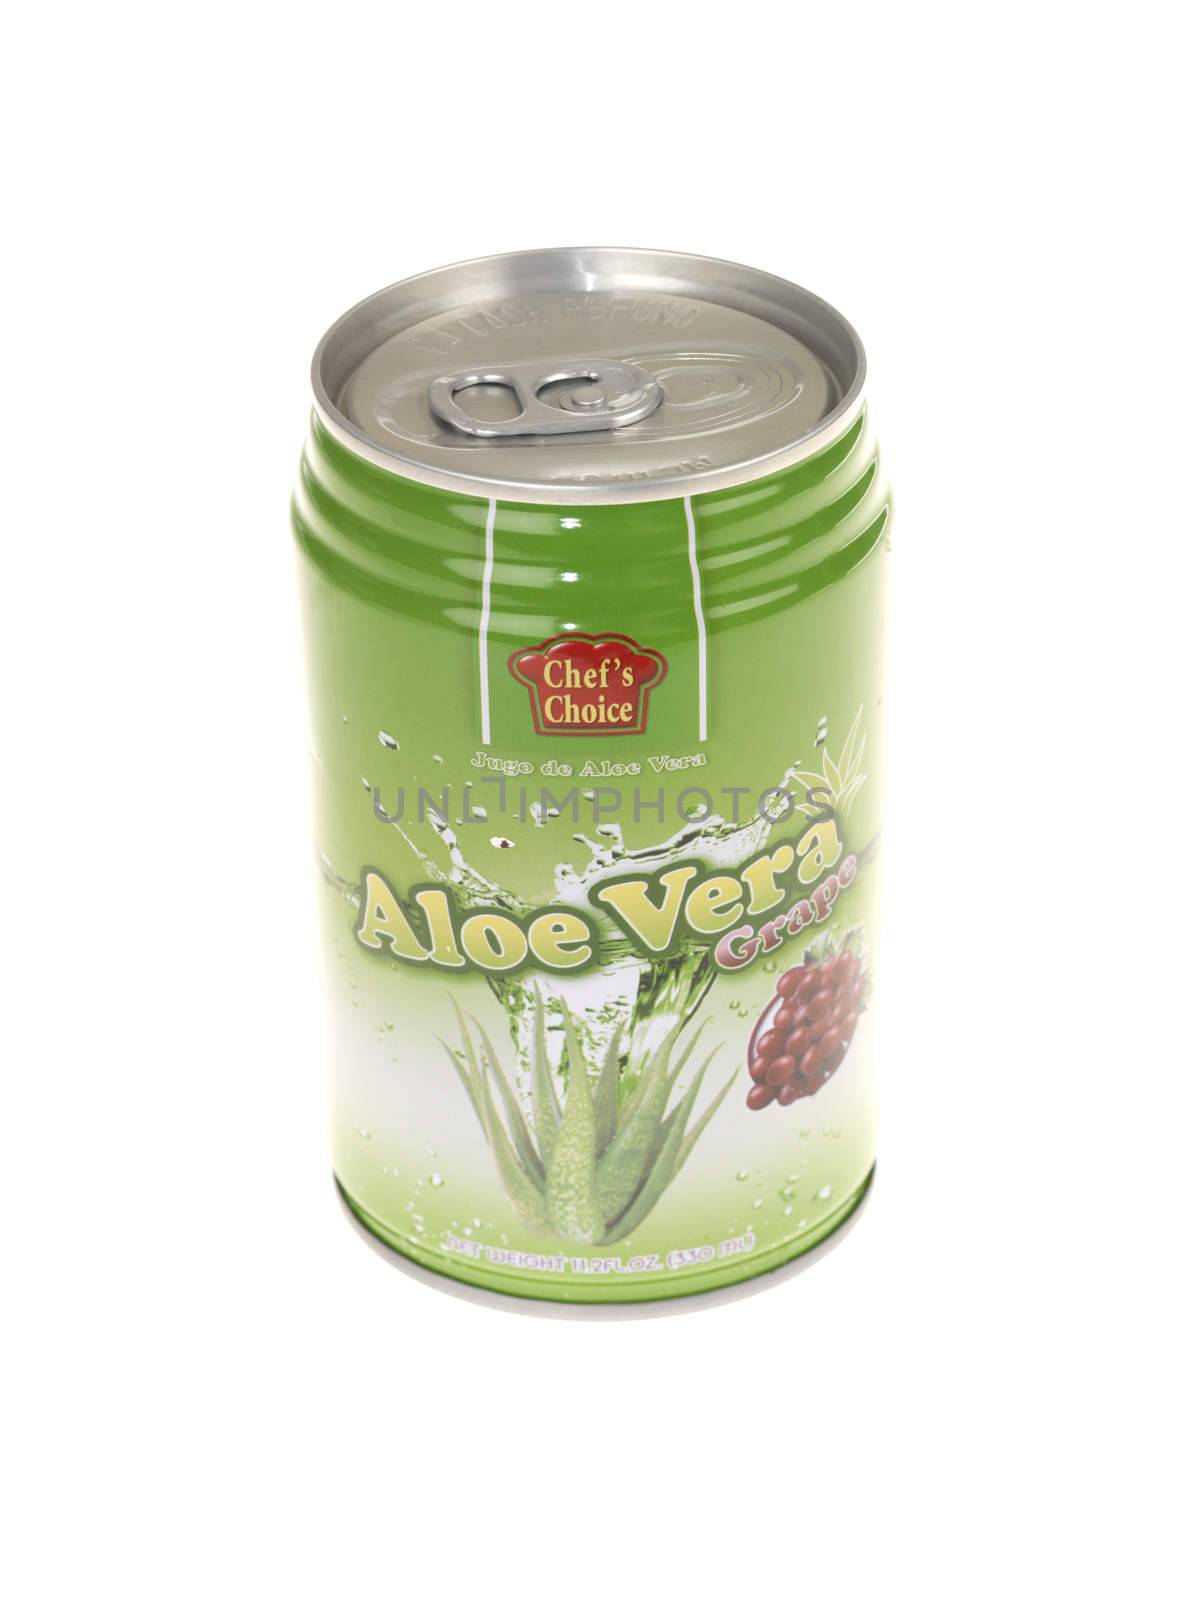 Can of Aloe Vera